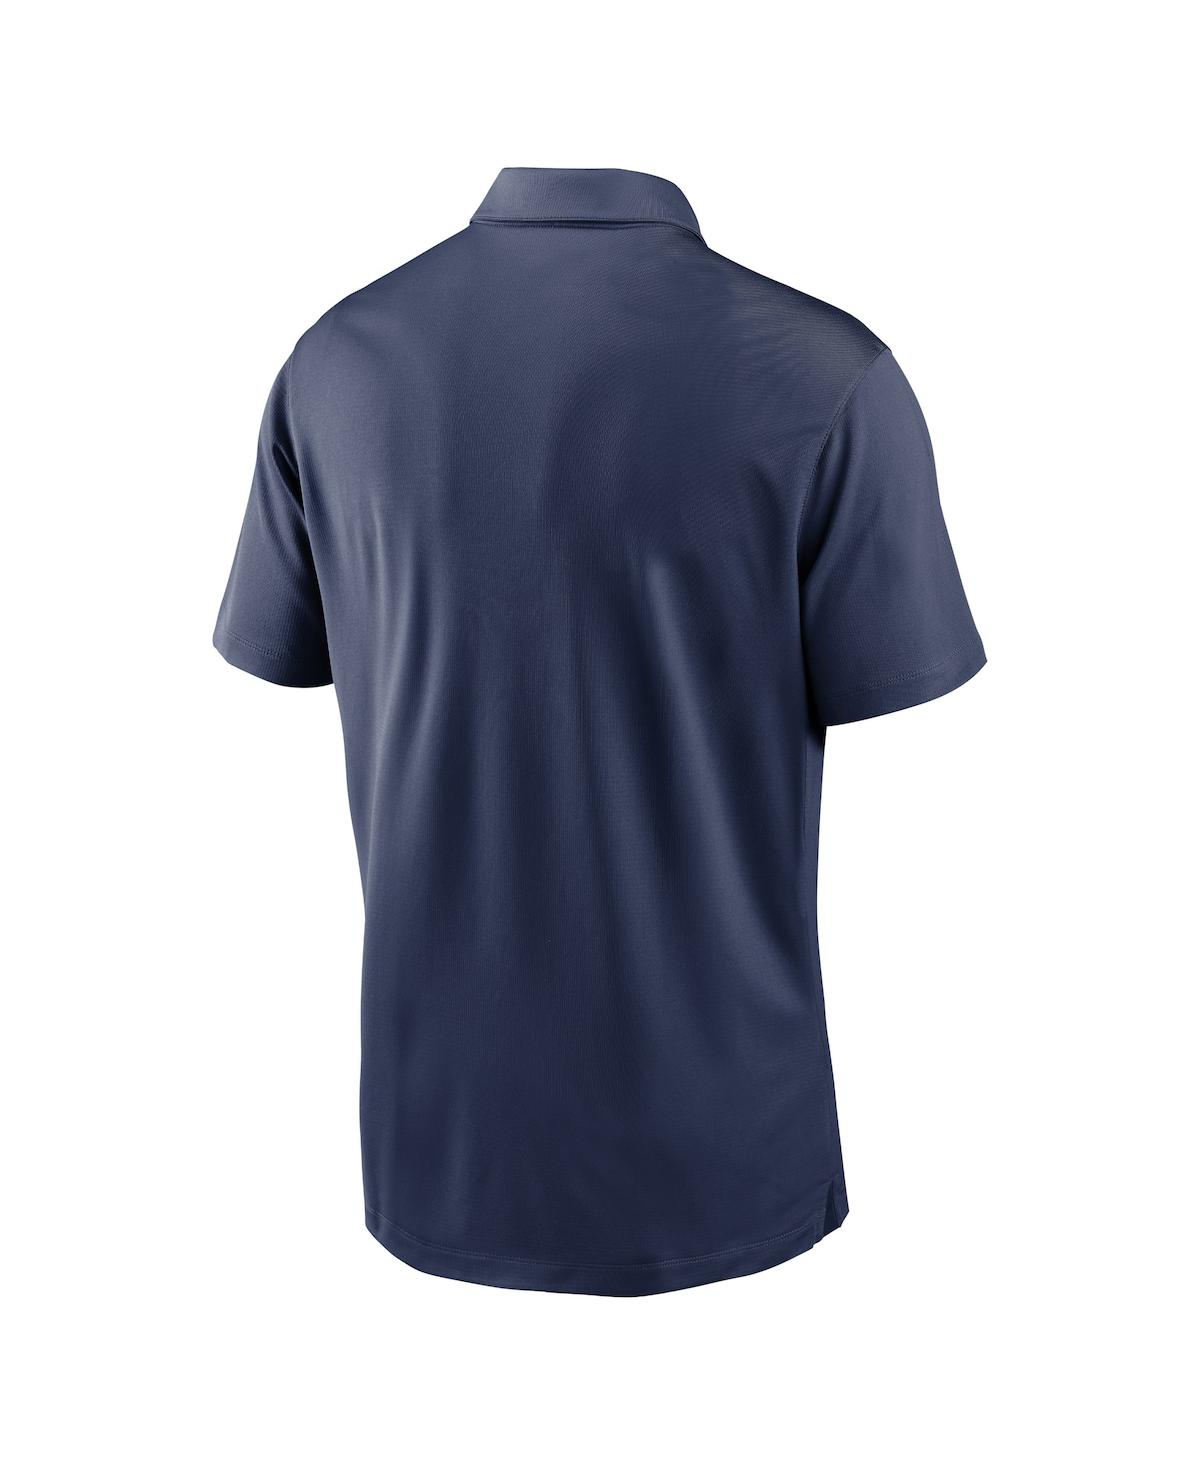 Shop Nike Men's  Navy Boston Red Sox Diamond Icon Franchise Performance Polo Shirt